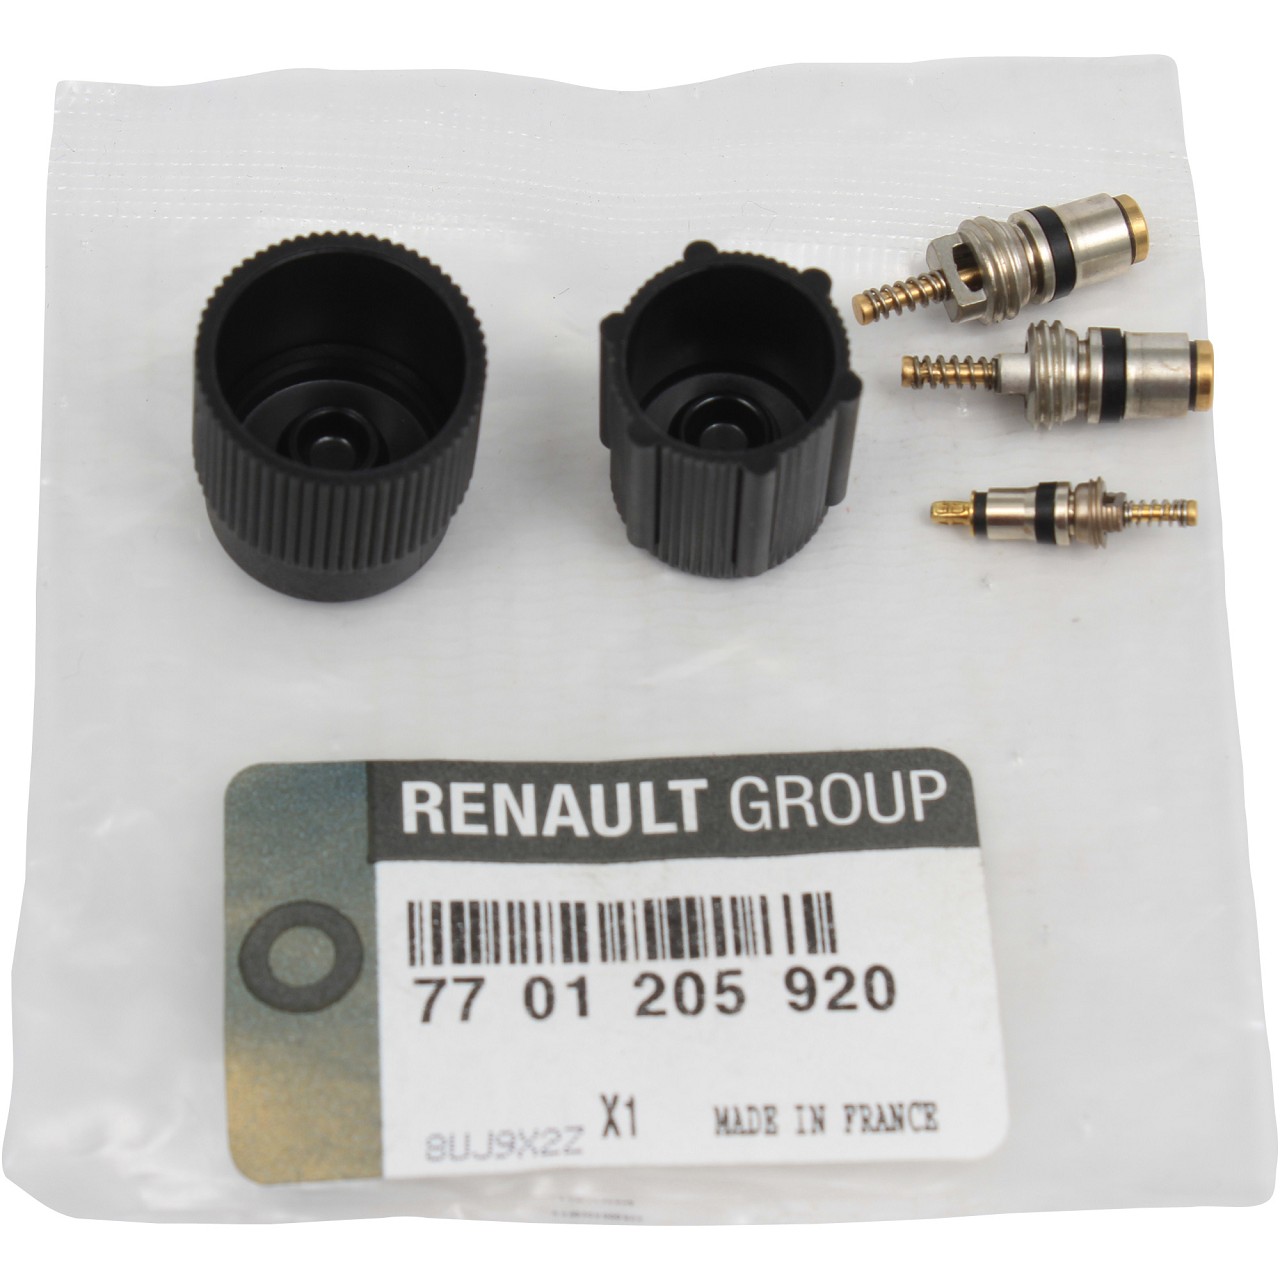 ORIGINAL Renault Ventil Klimaanlage Druckleitungsventil Kangoo 7701205920